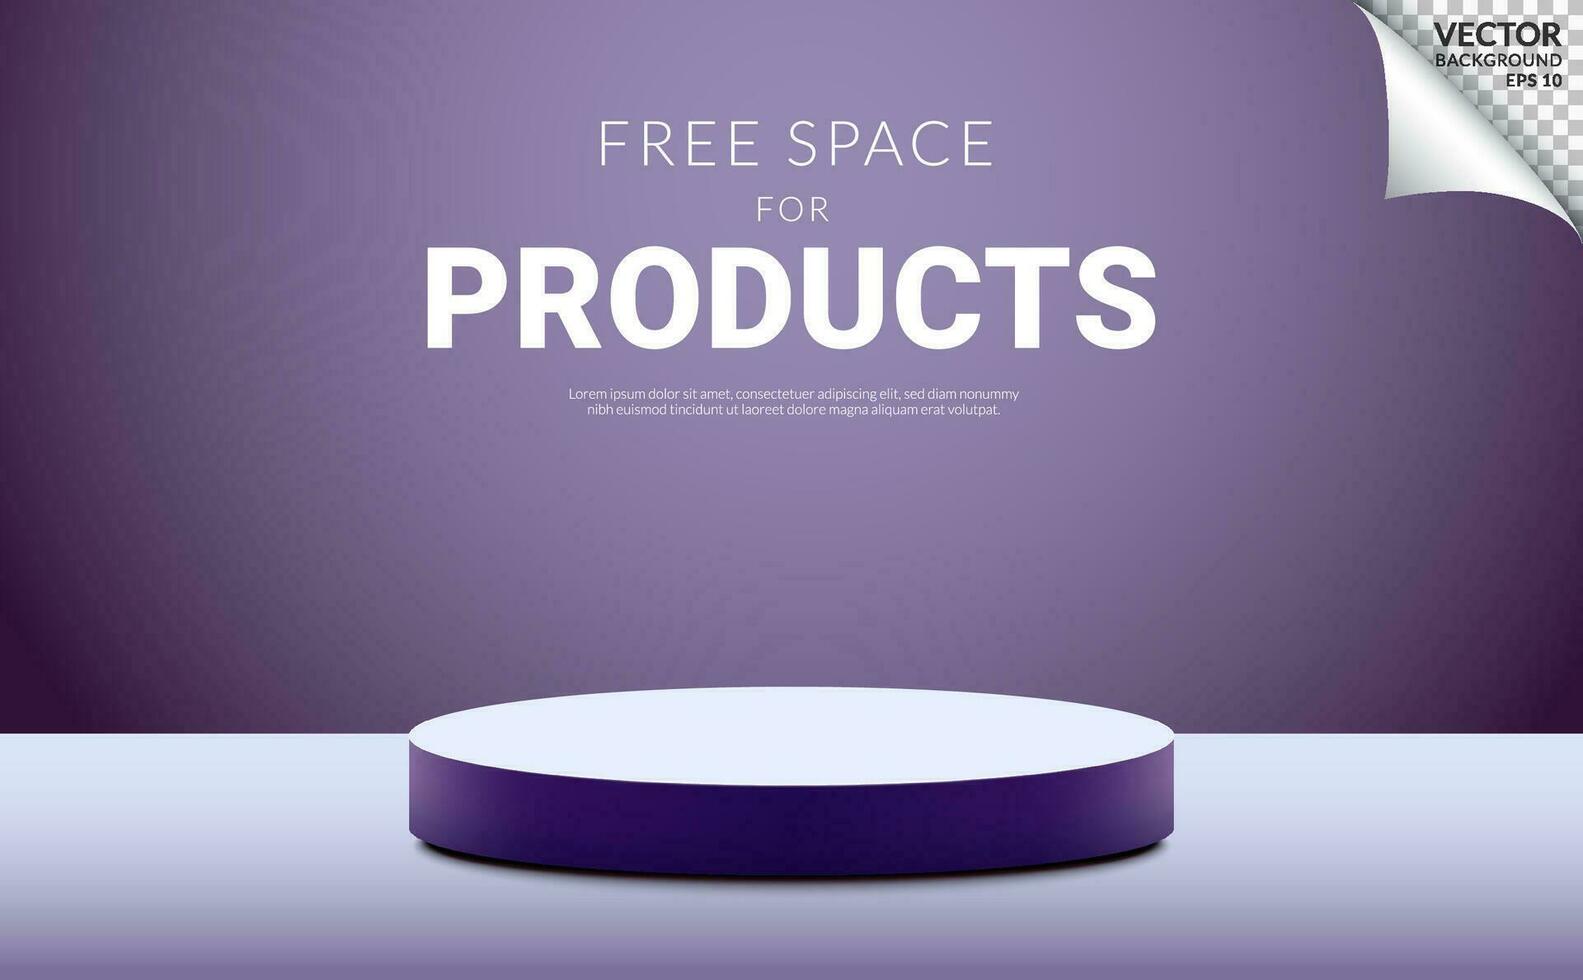 púrpura podio gratis espacio para productos en púrpura antecedentes. vector ilustración